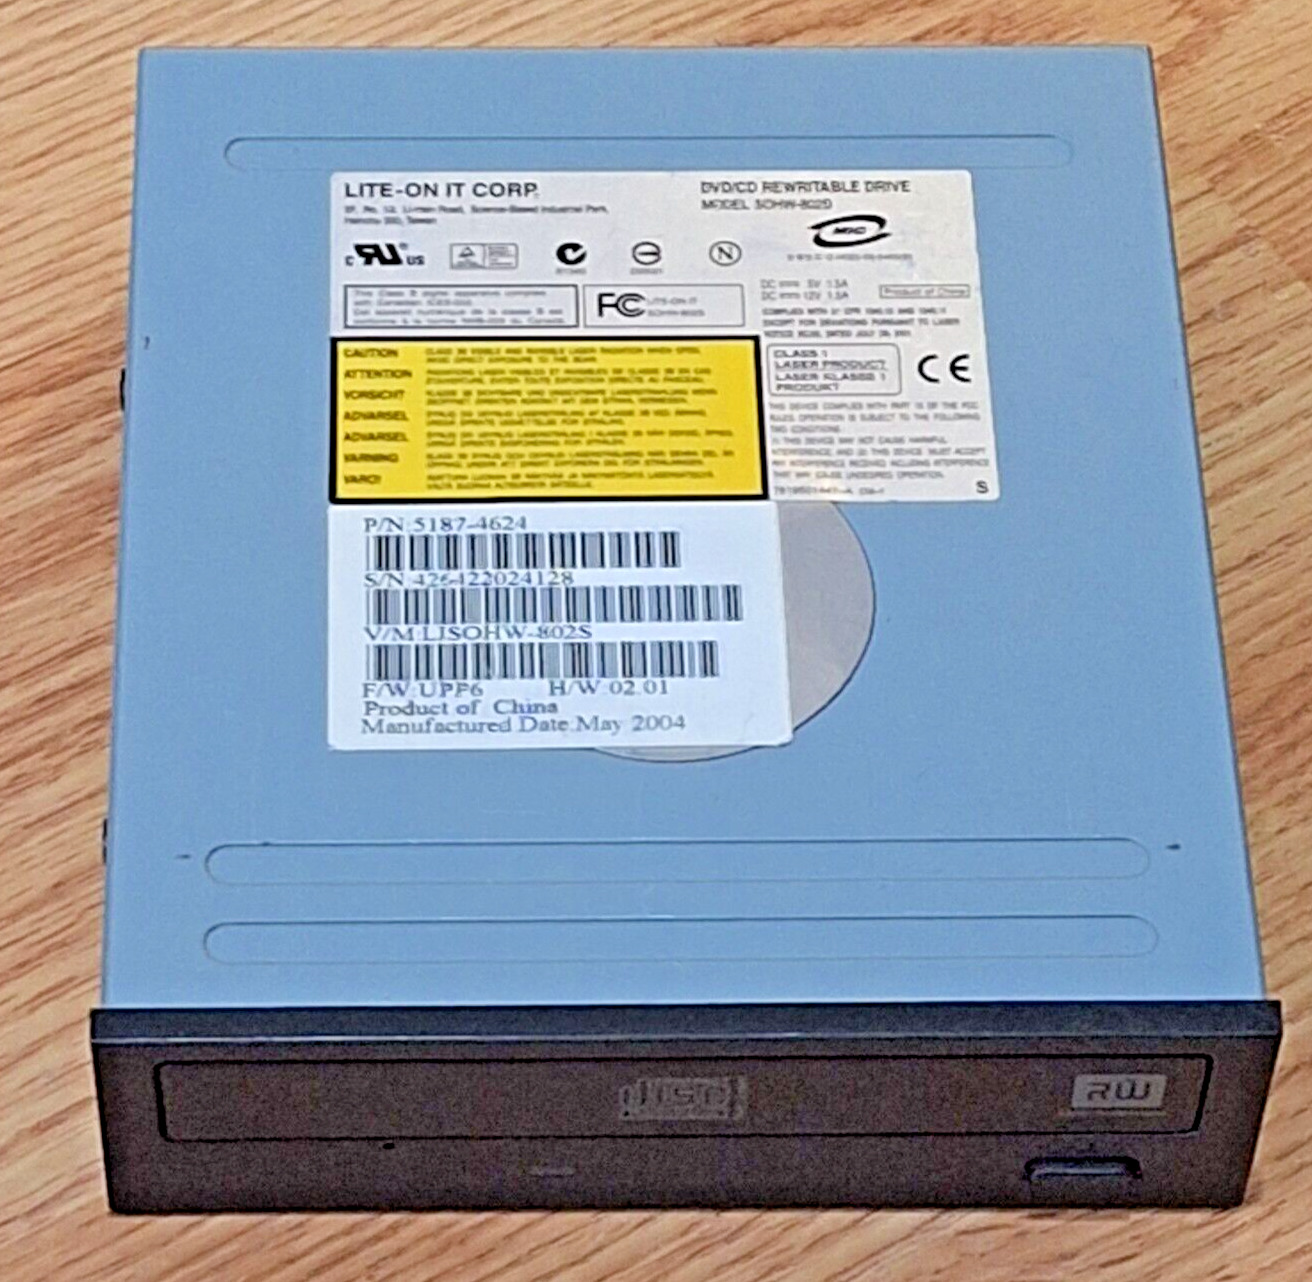 Lite-On IT Corp DVD/CD Rewritable Drive SOHW-802S